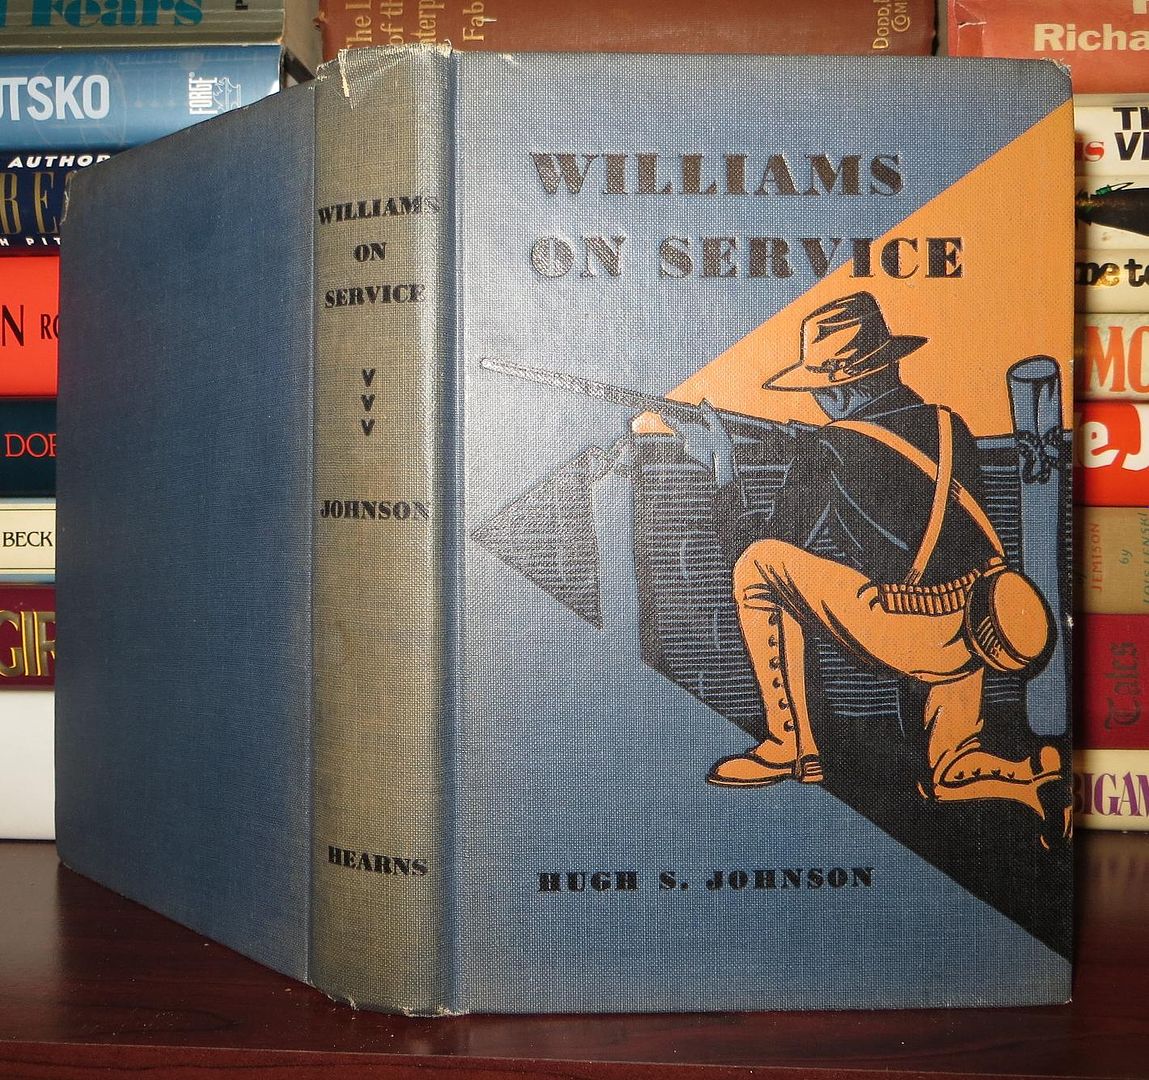 JOHNSON, HUGH S. - Williams on Service